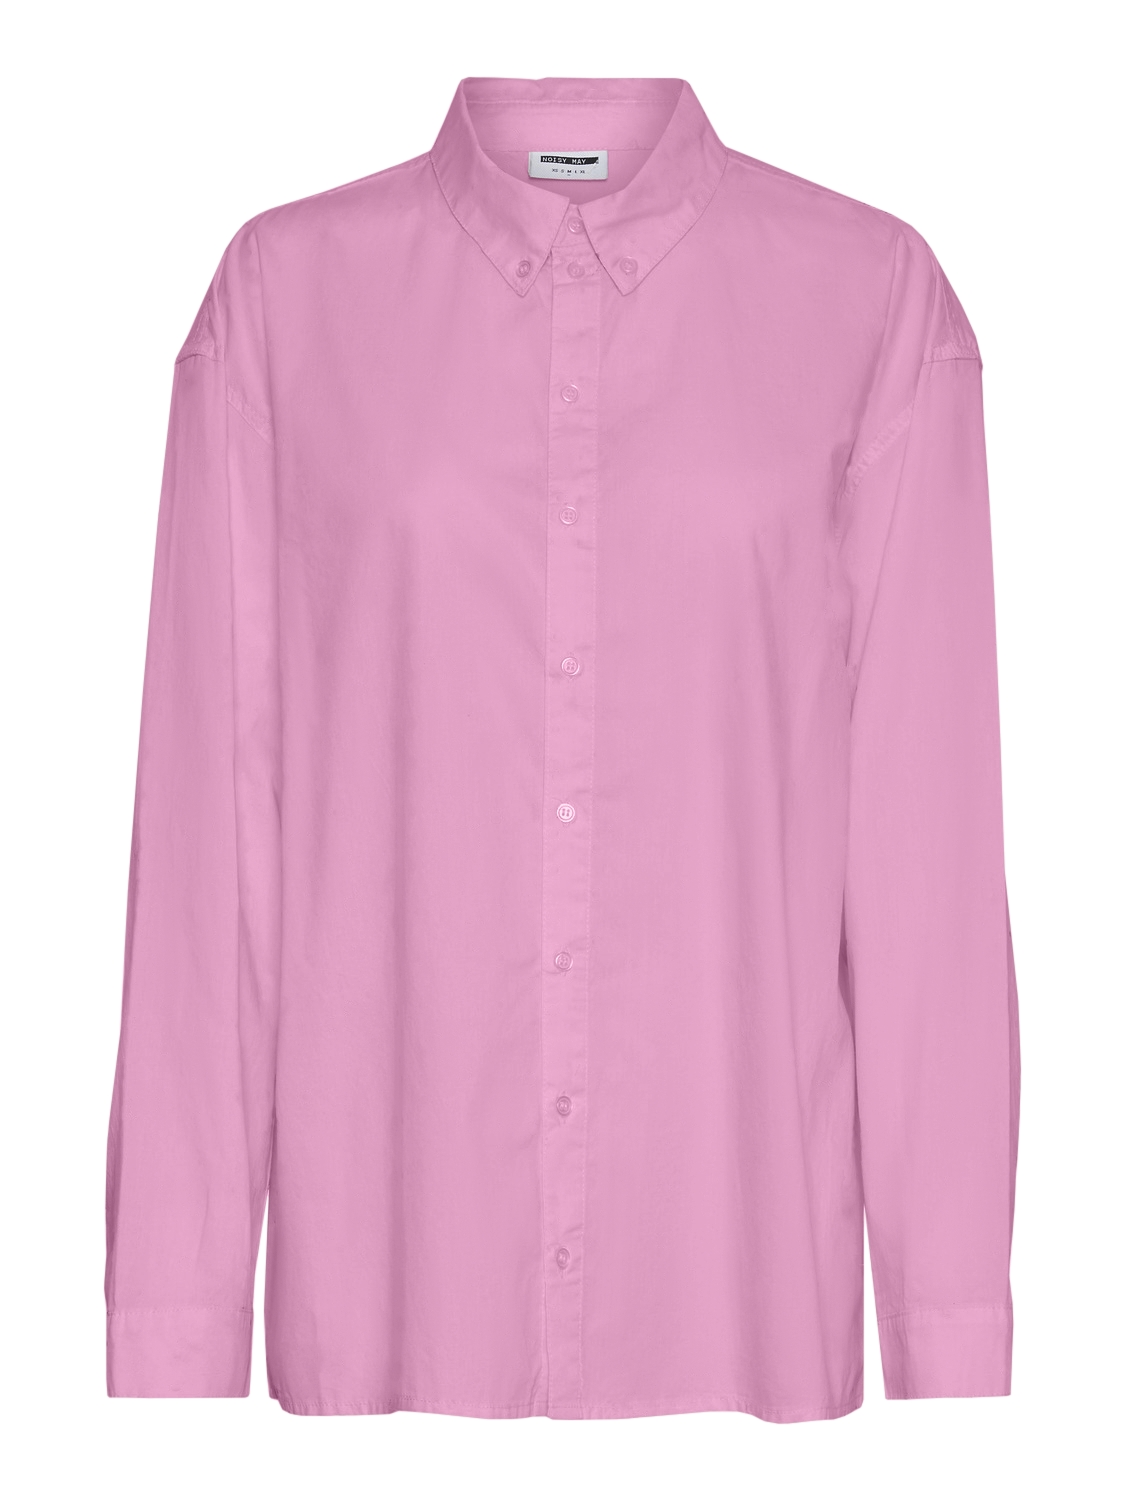  Violet Oversize Skjorte, Fuchsia Pink, S